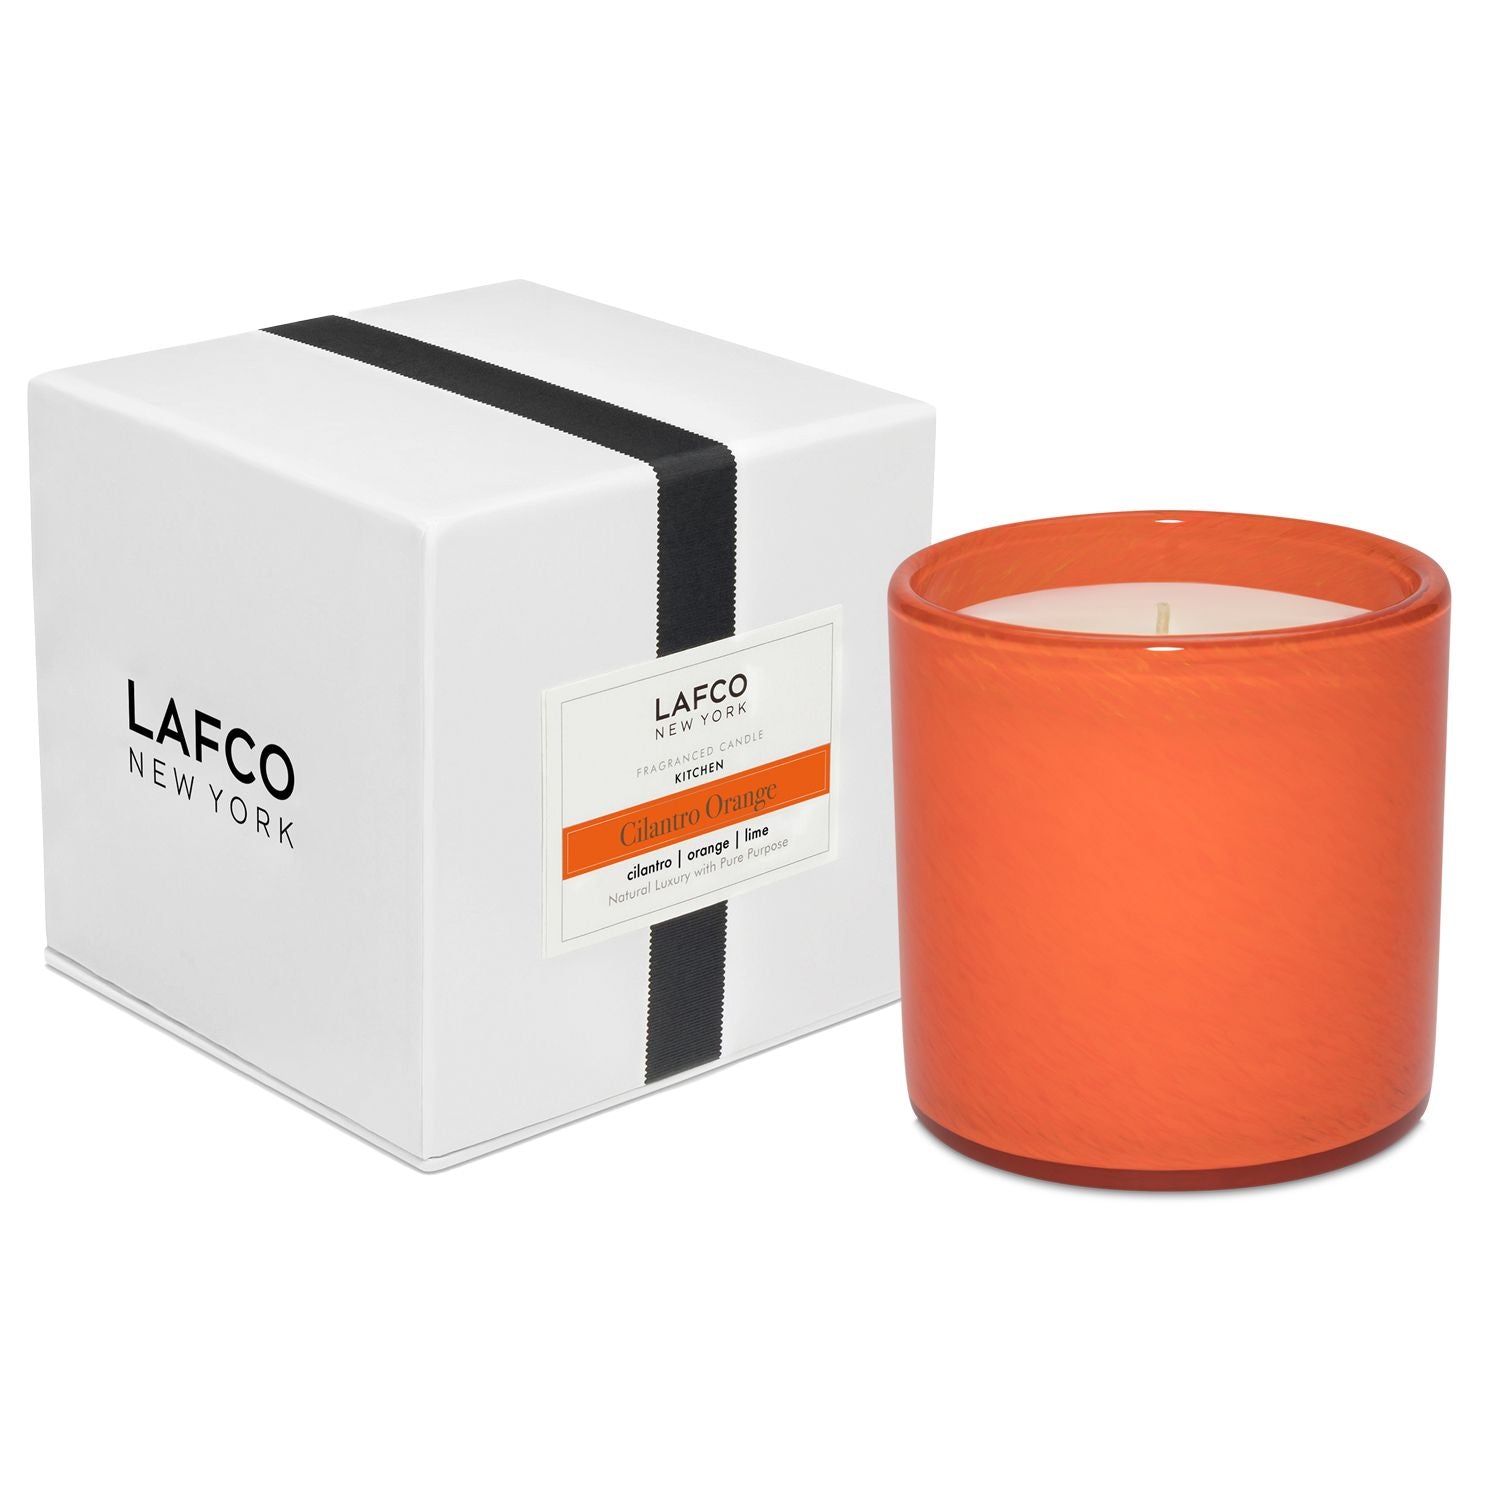 Red-Orange Lafco Candle scented "Cilantro Orange".